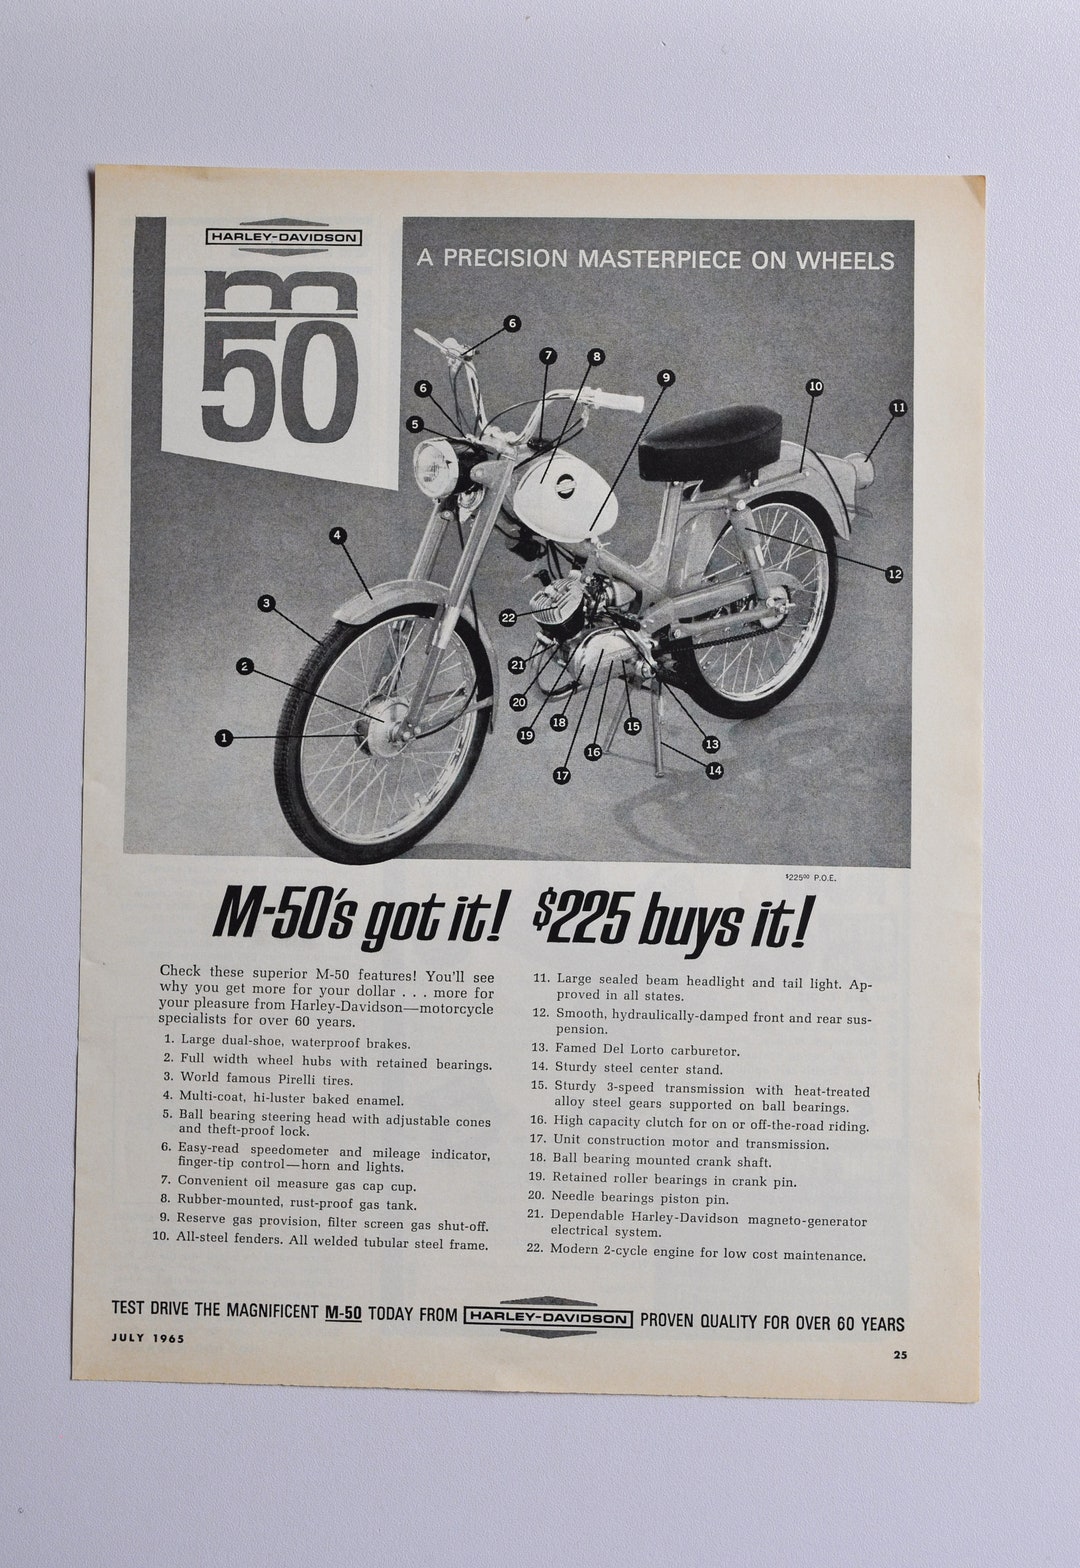 Harley Davidson Motorcycle Gunk Cleaner Original 1950s Print Advertisement  